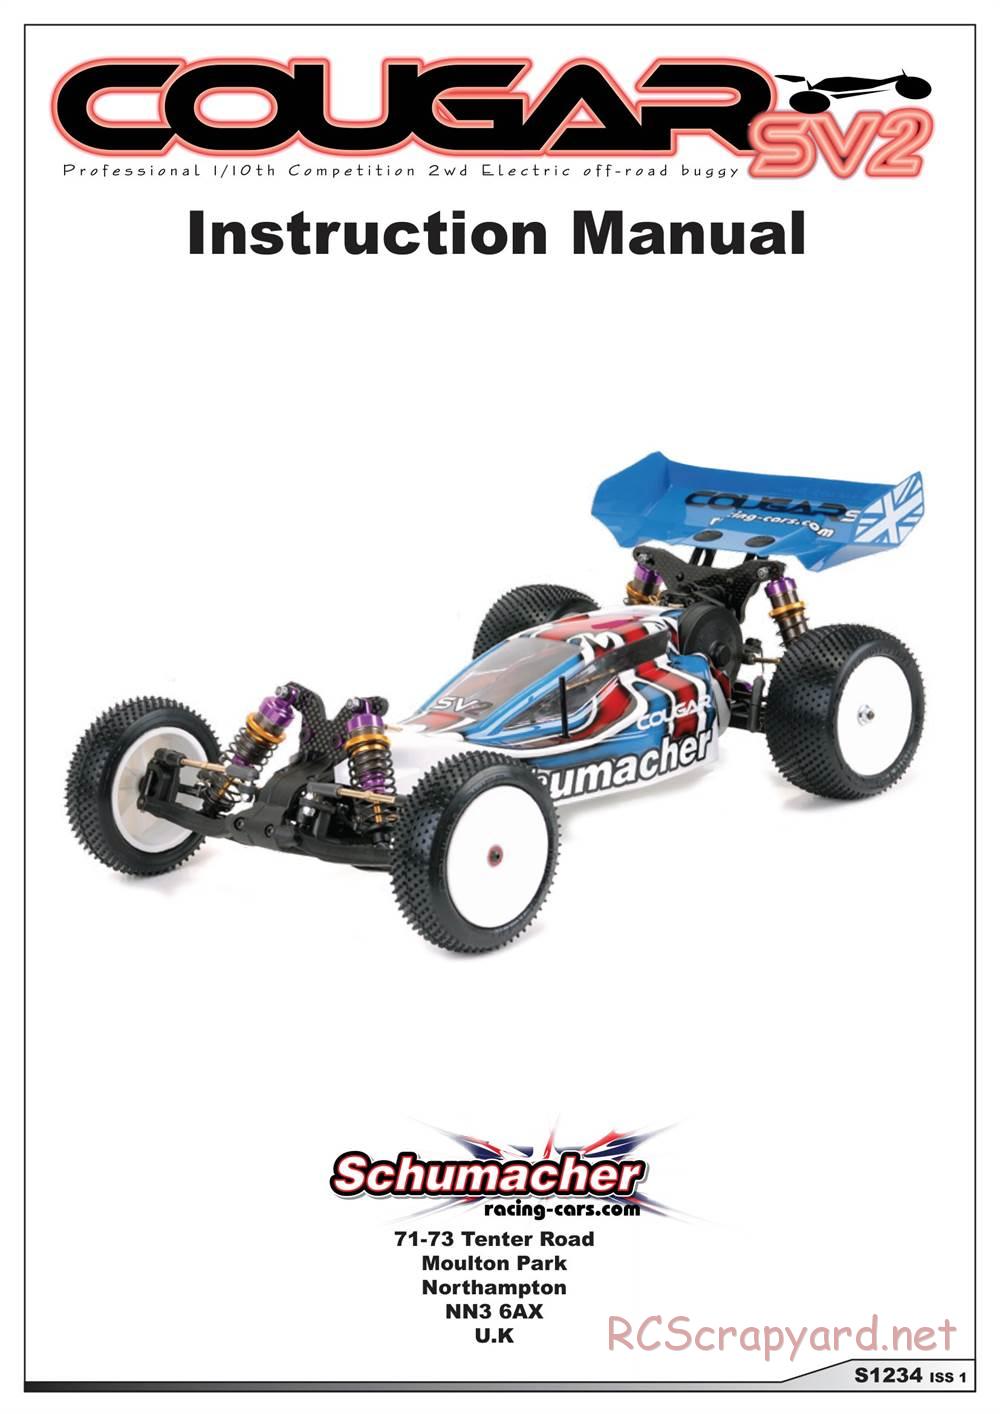 Schumacher - Cougar SV2 - Manual - Page 1